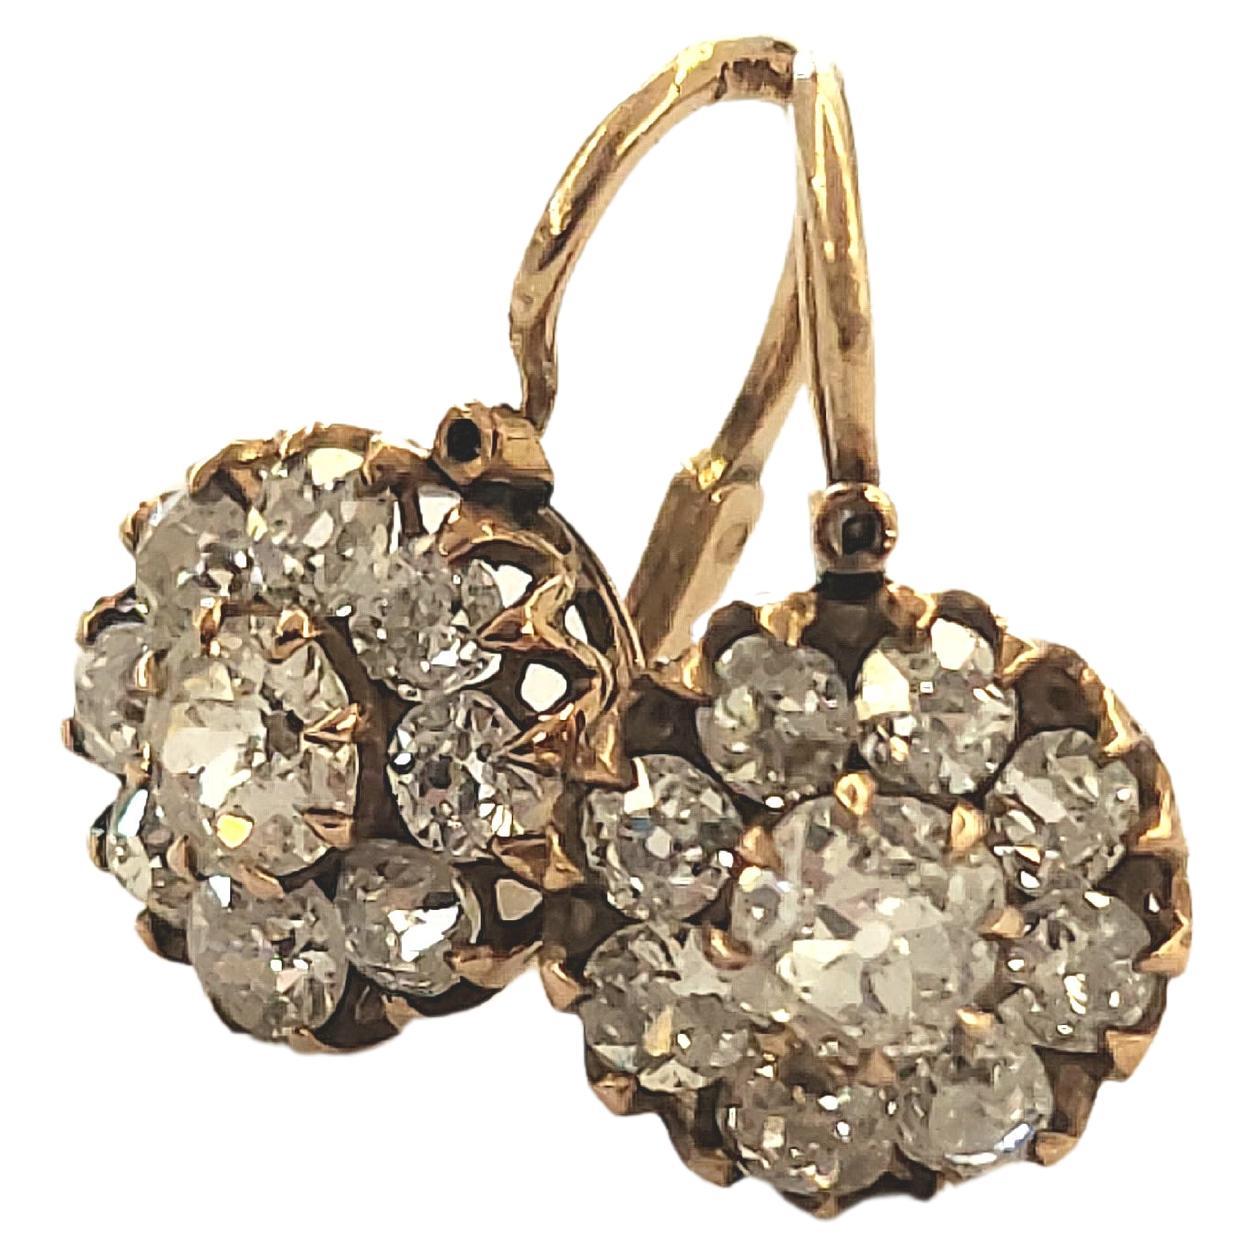 diamond gold earrings distributor -china -china -forum -blog -wikipedia -.cn -.gov -alibaba